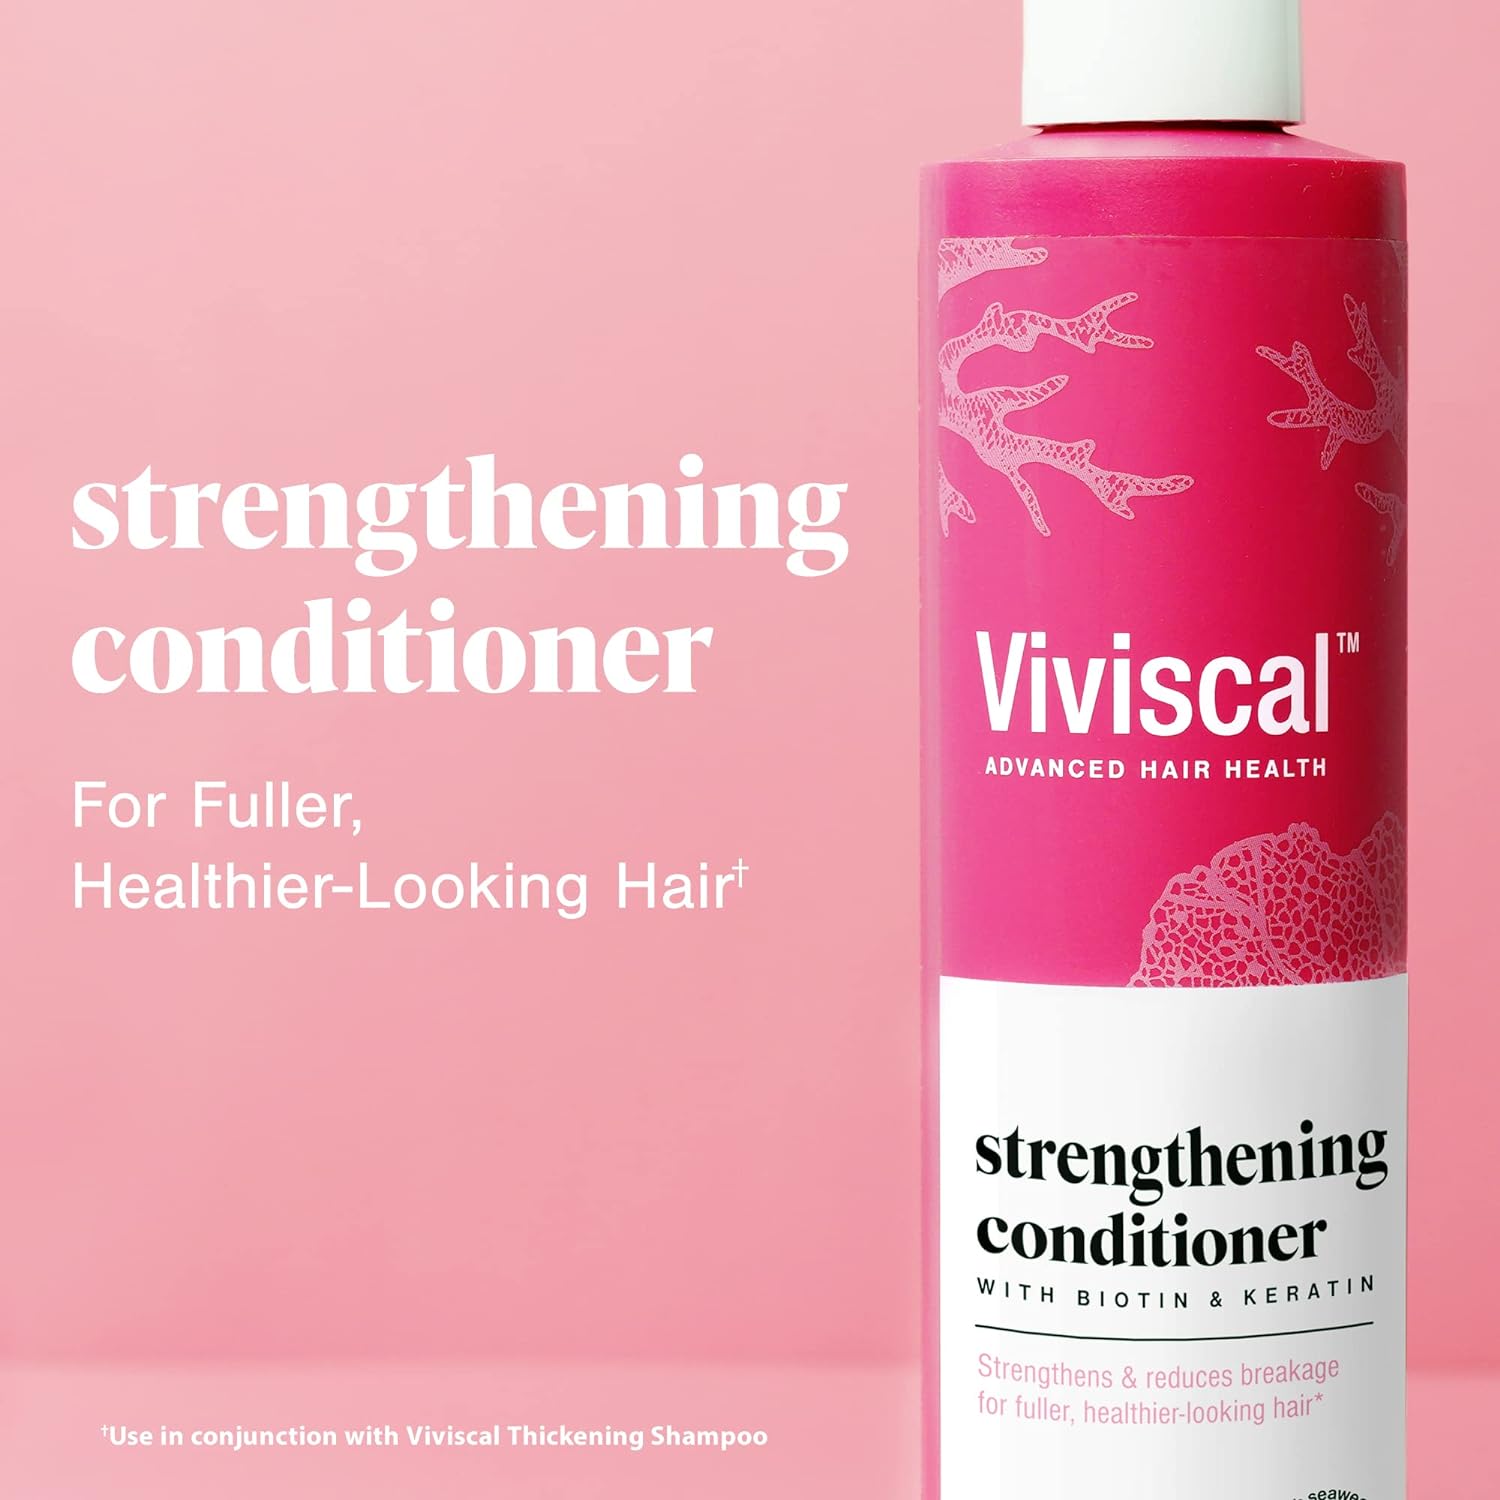 Viviscal hair strengthening conditioner for fuller, healthier-looking hair